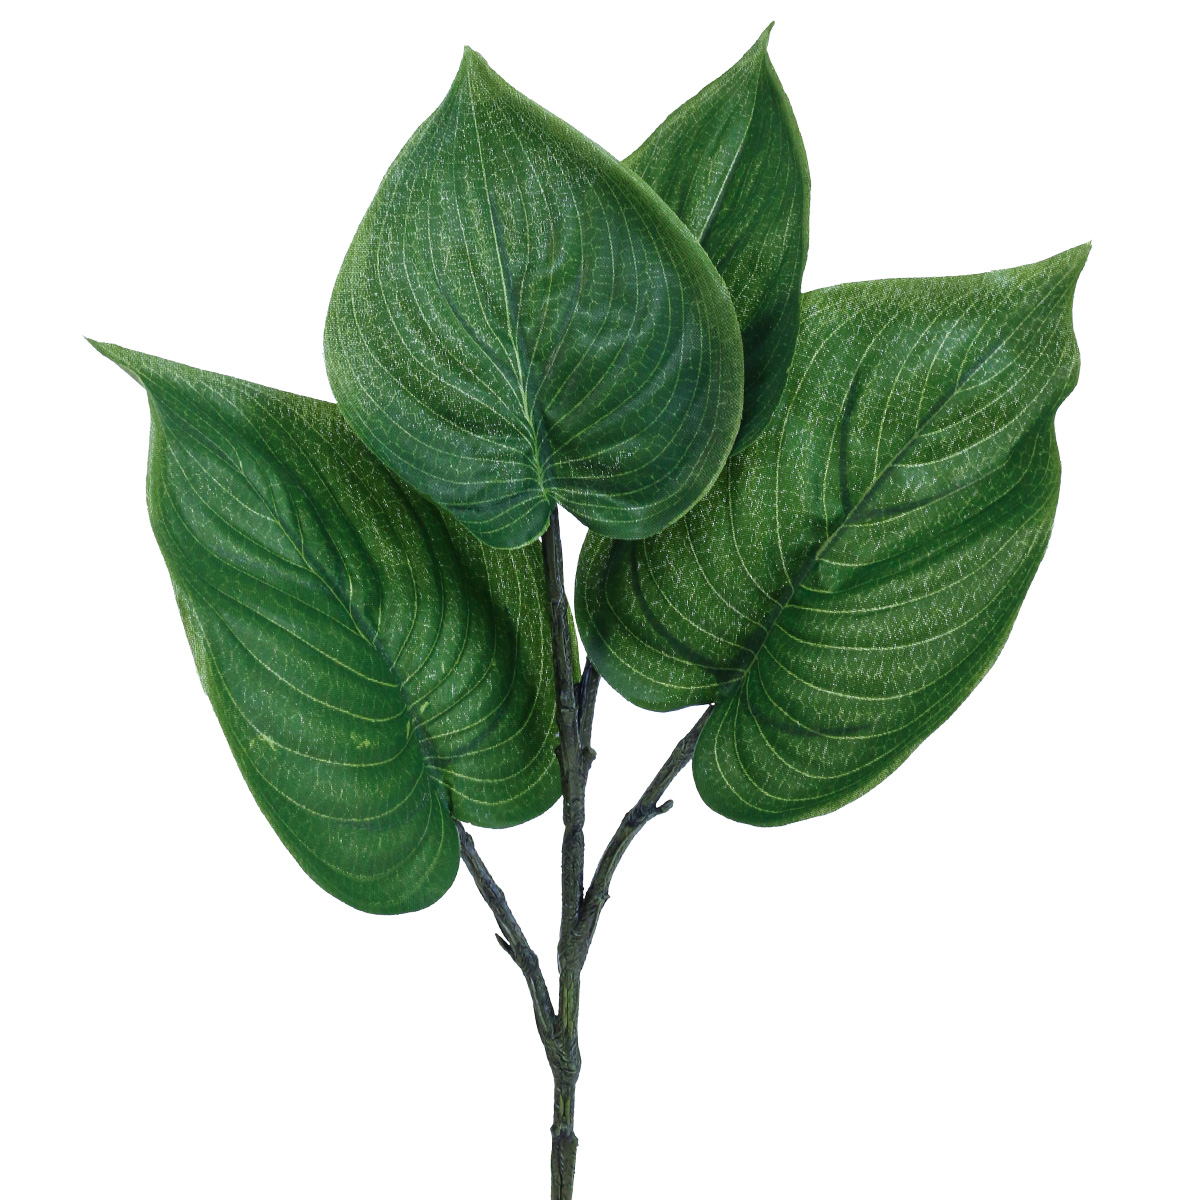 Philodendron artificiel, Plante verte artificielle